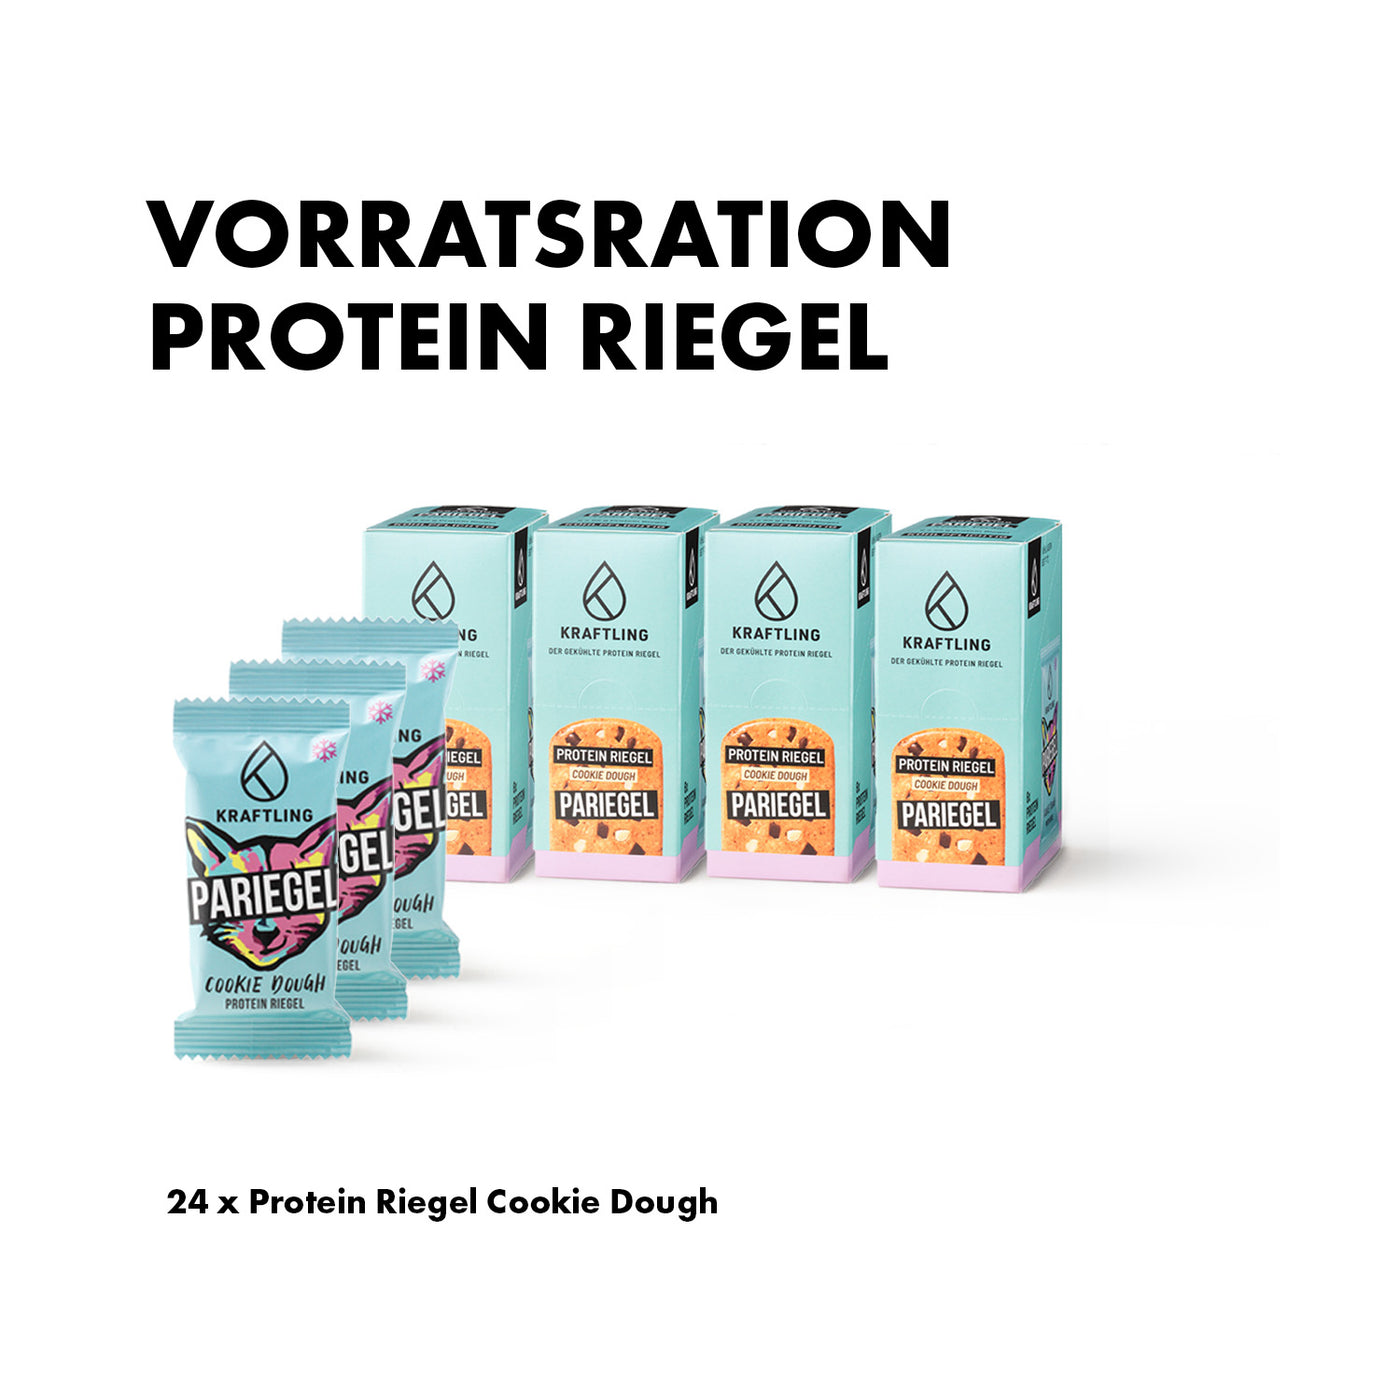 Reserve Ration - PARIEGEL Protein Bar Cookie Dough 